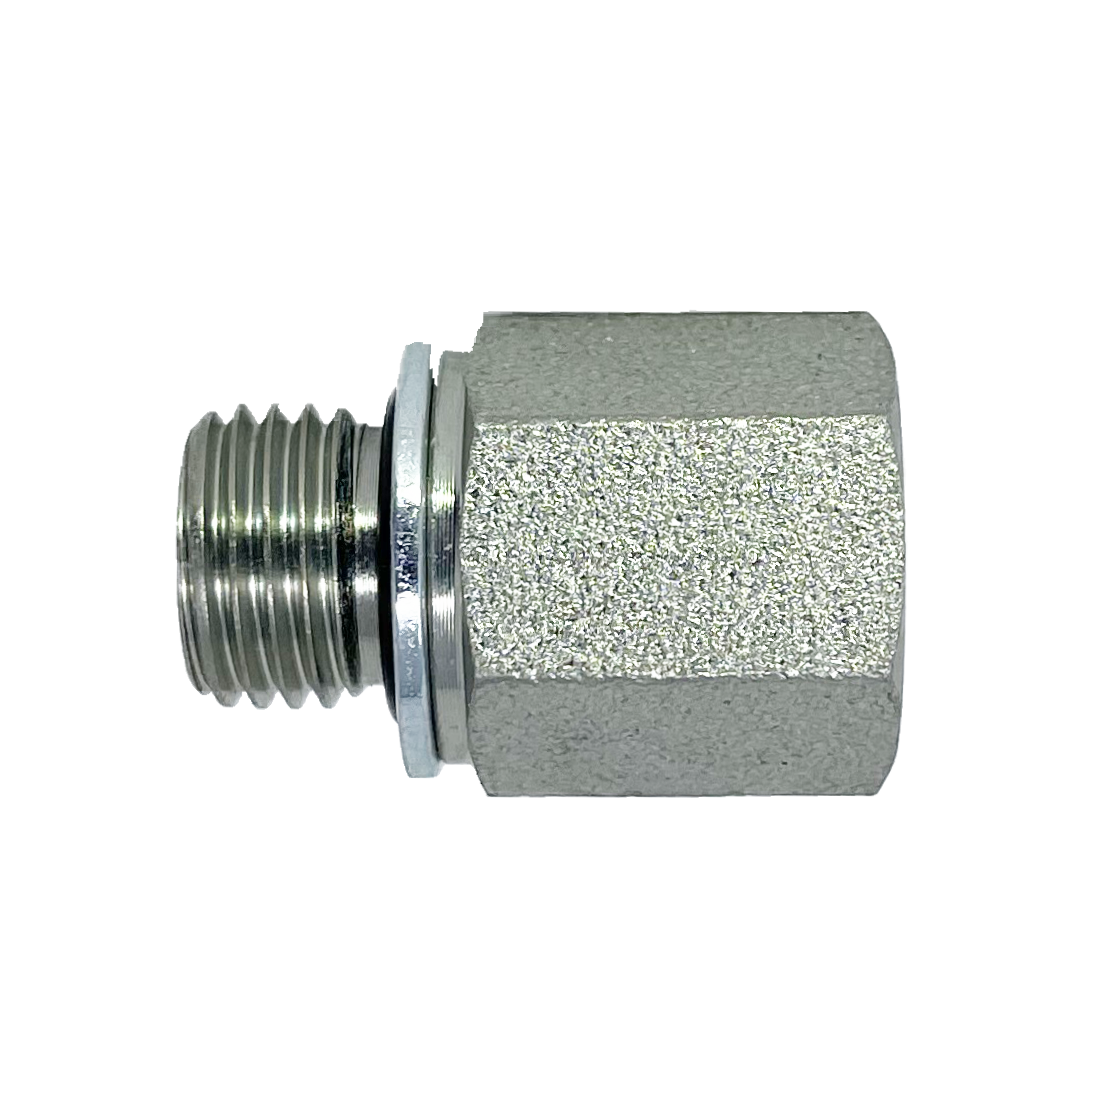 9635S-26-L18-12 : Adaptall Straight Adapter, Male L18 DIN Tube x Female 0.75 (3/4") NPT, Carbon Steel